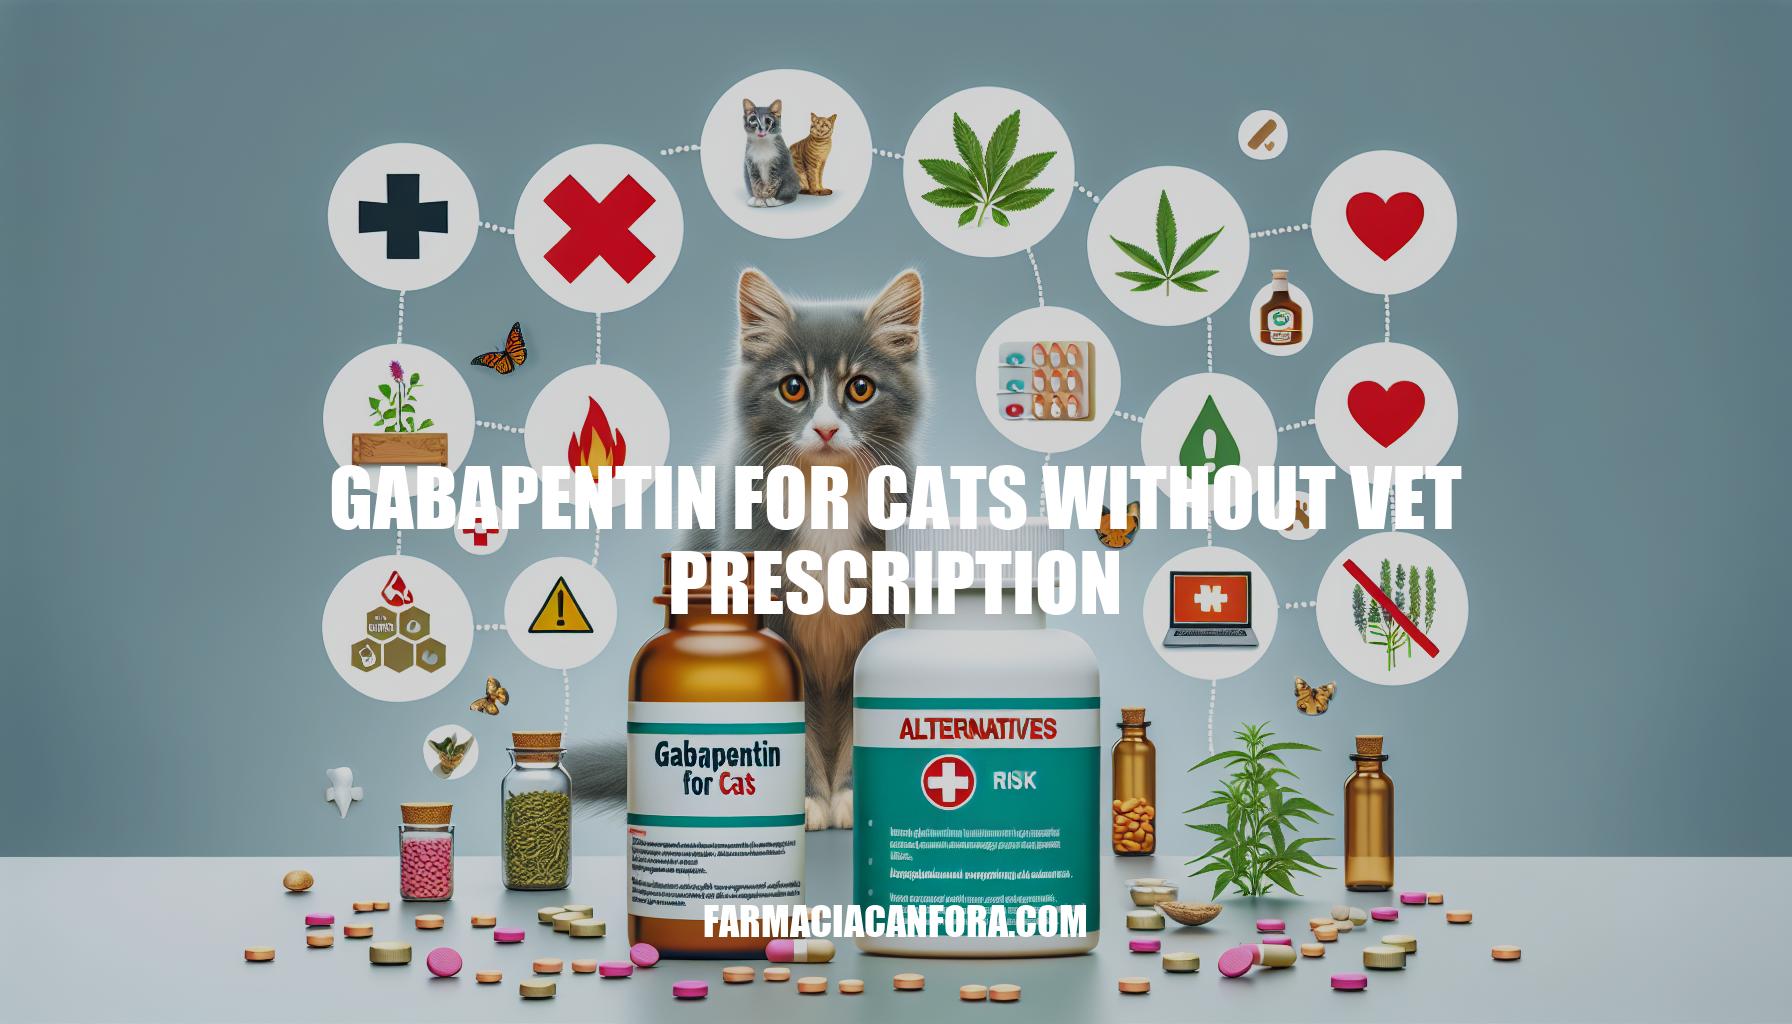 Gabapentin for Cats Without Vet Prescription: Risks and Alternatives